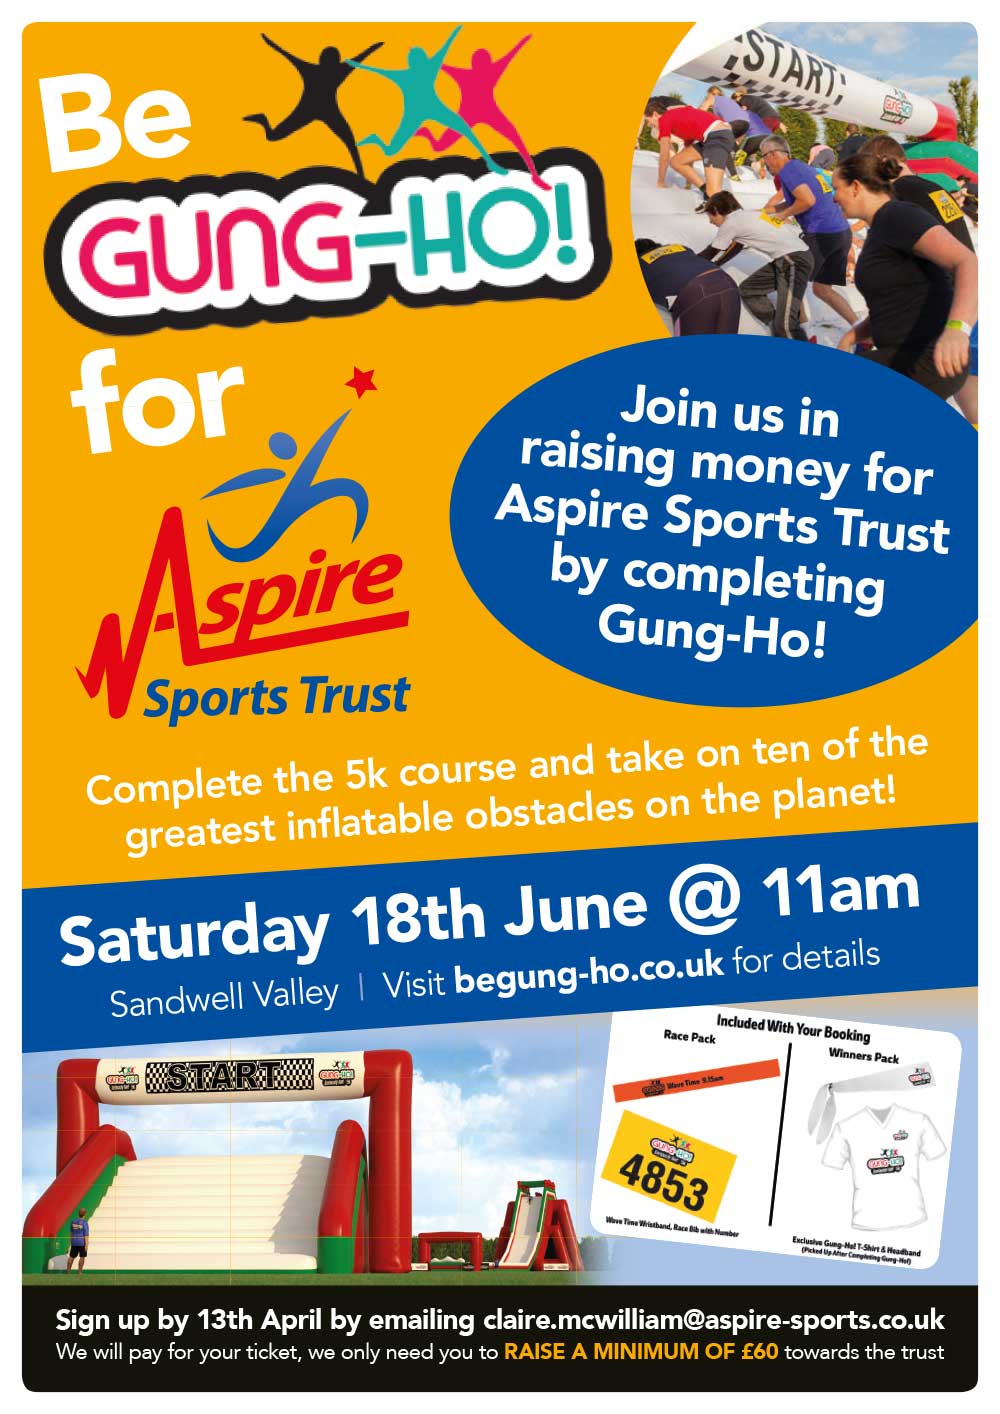 Aspire-Sports-Trust-Gung-Ho-Poster